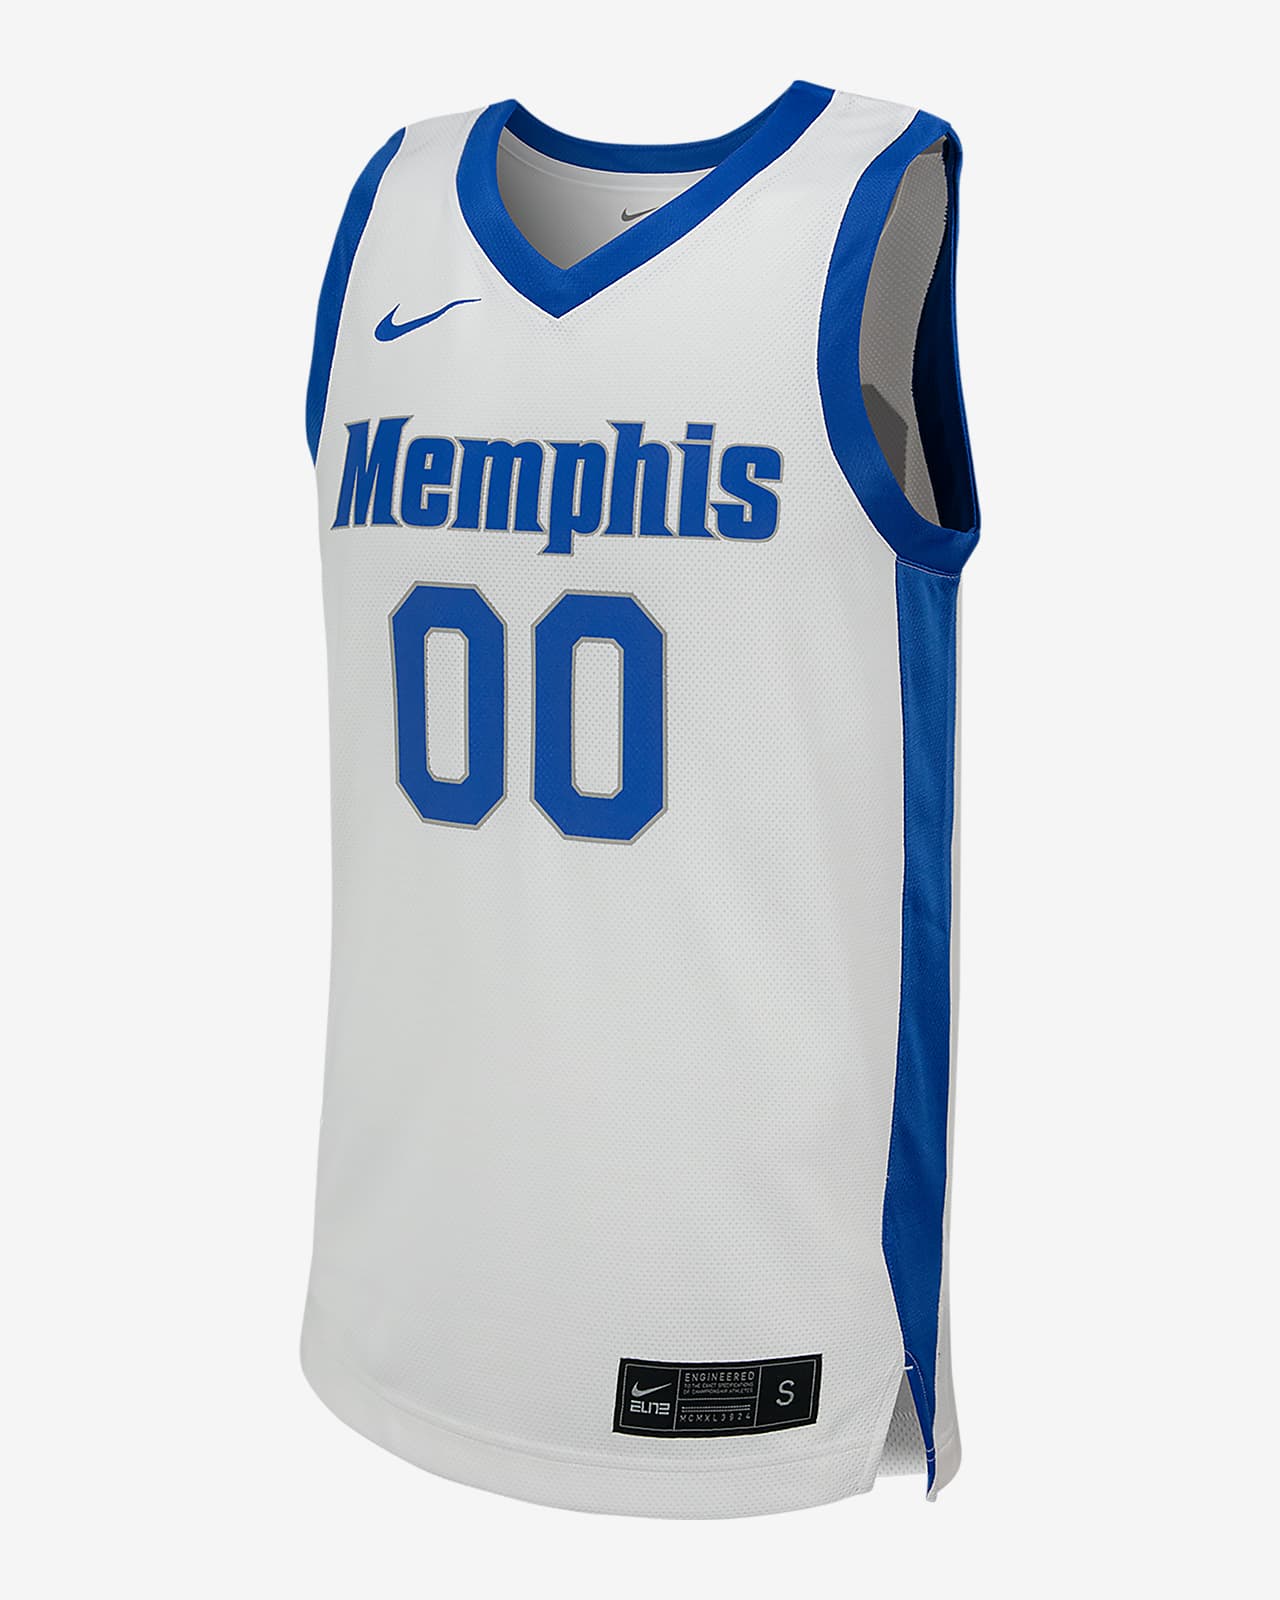 Memphis Men's Nike College Basketball Replica Jersey